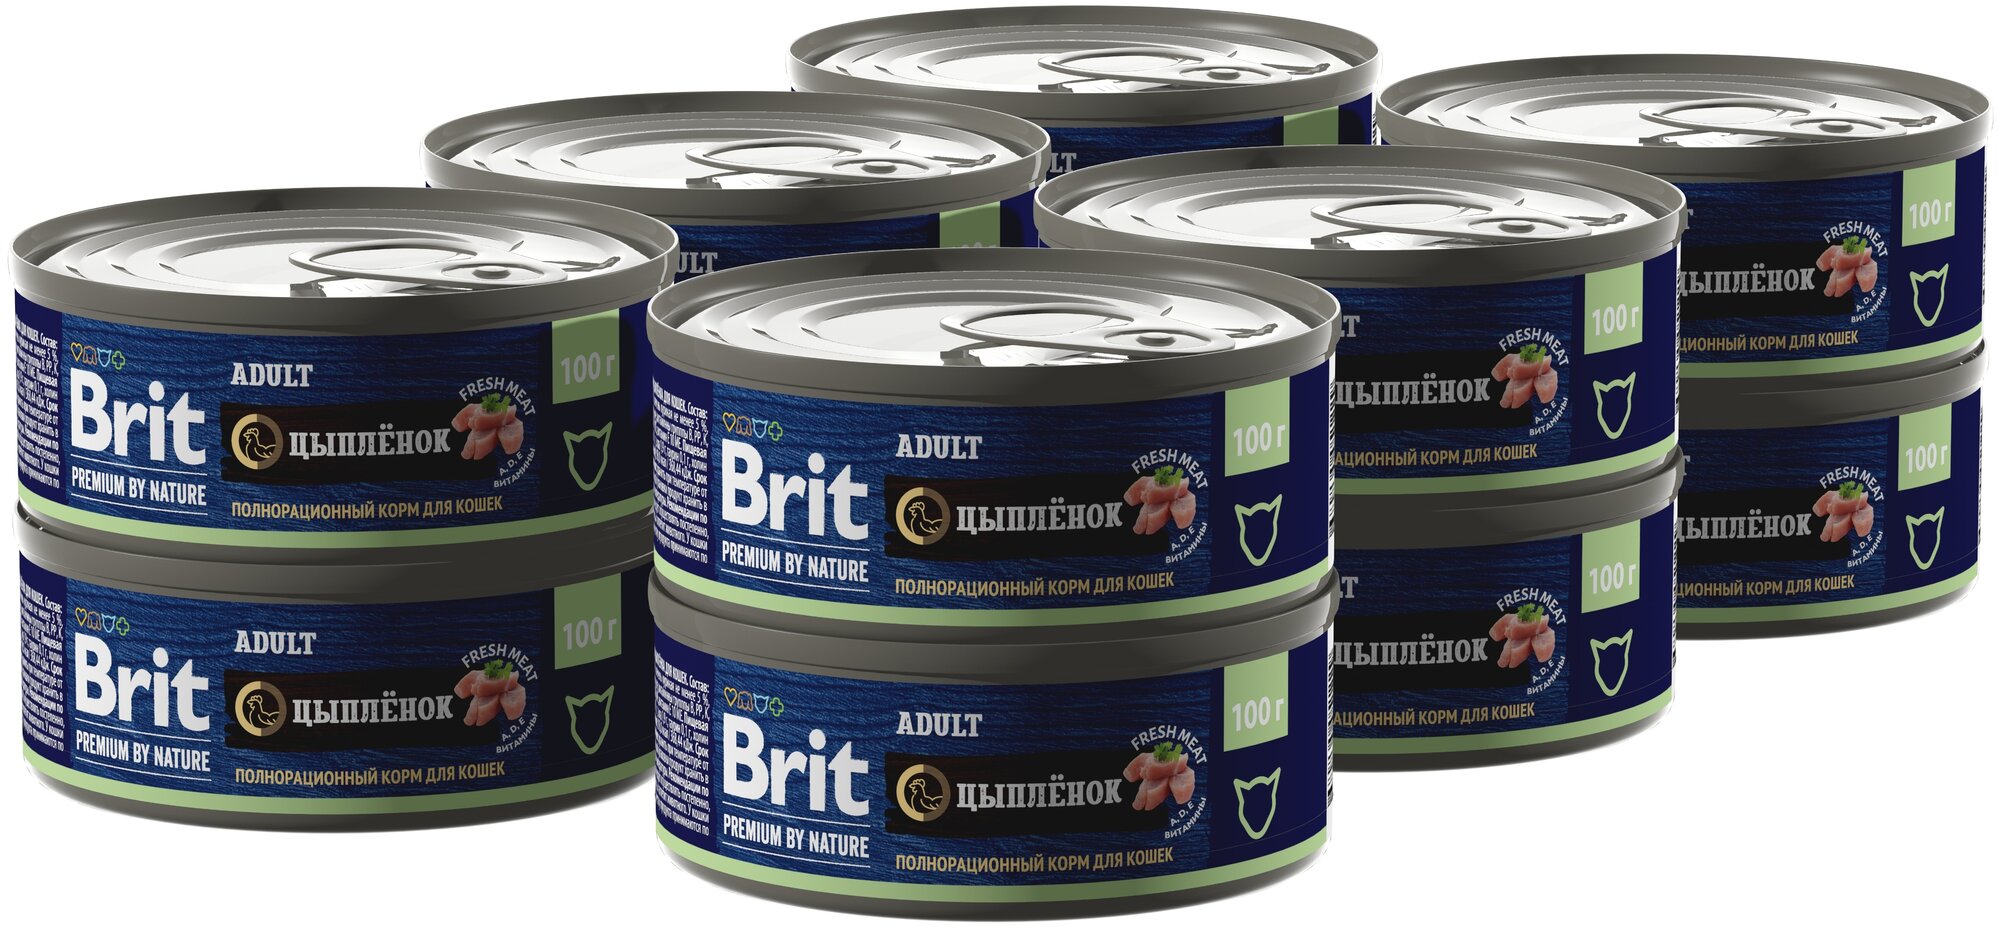 Консервы для кошек Brit Premium by Nature, с мясом цыплёнка, 100 гр*12 шт